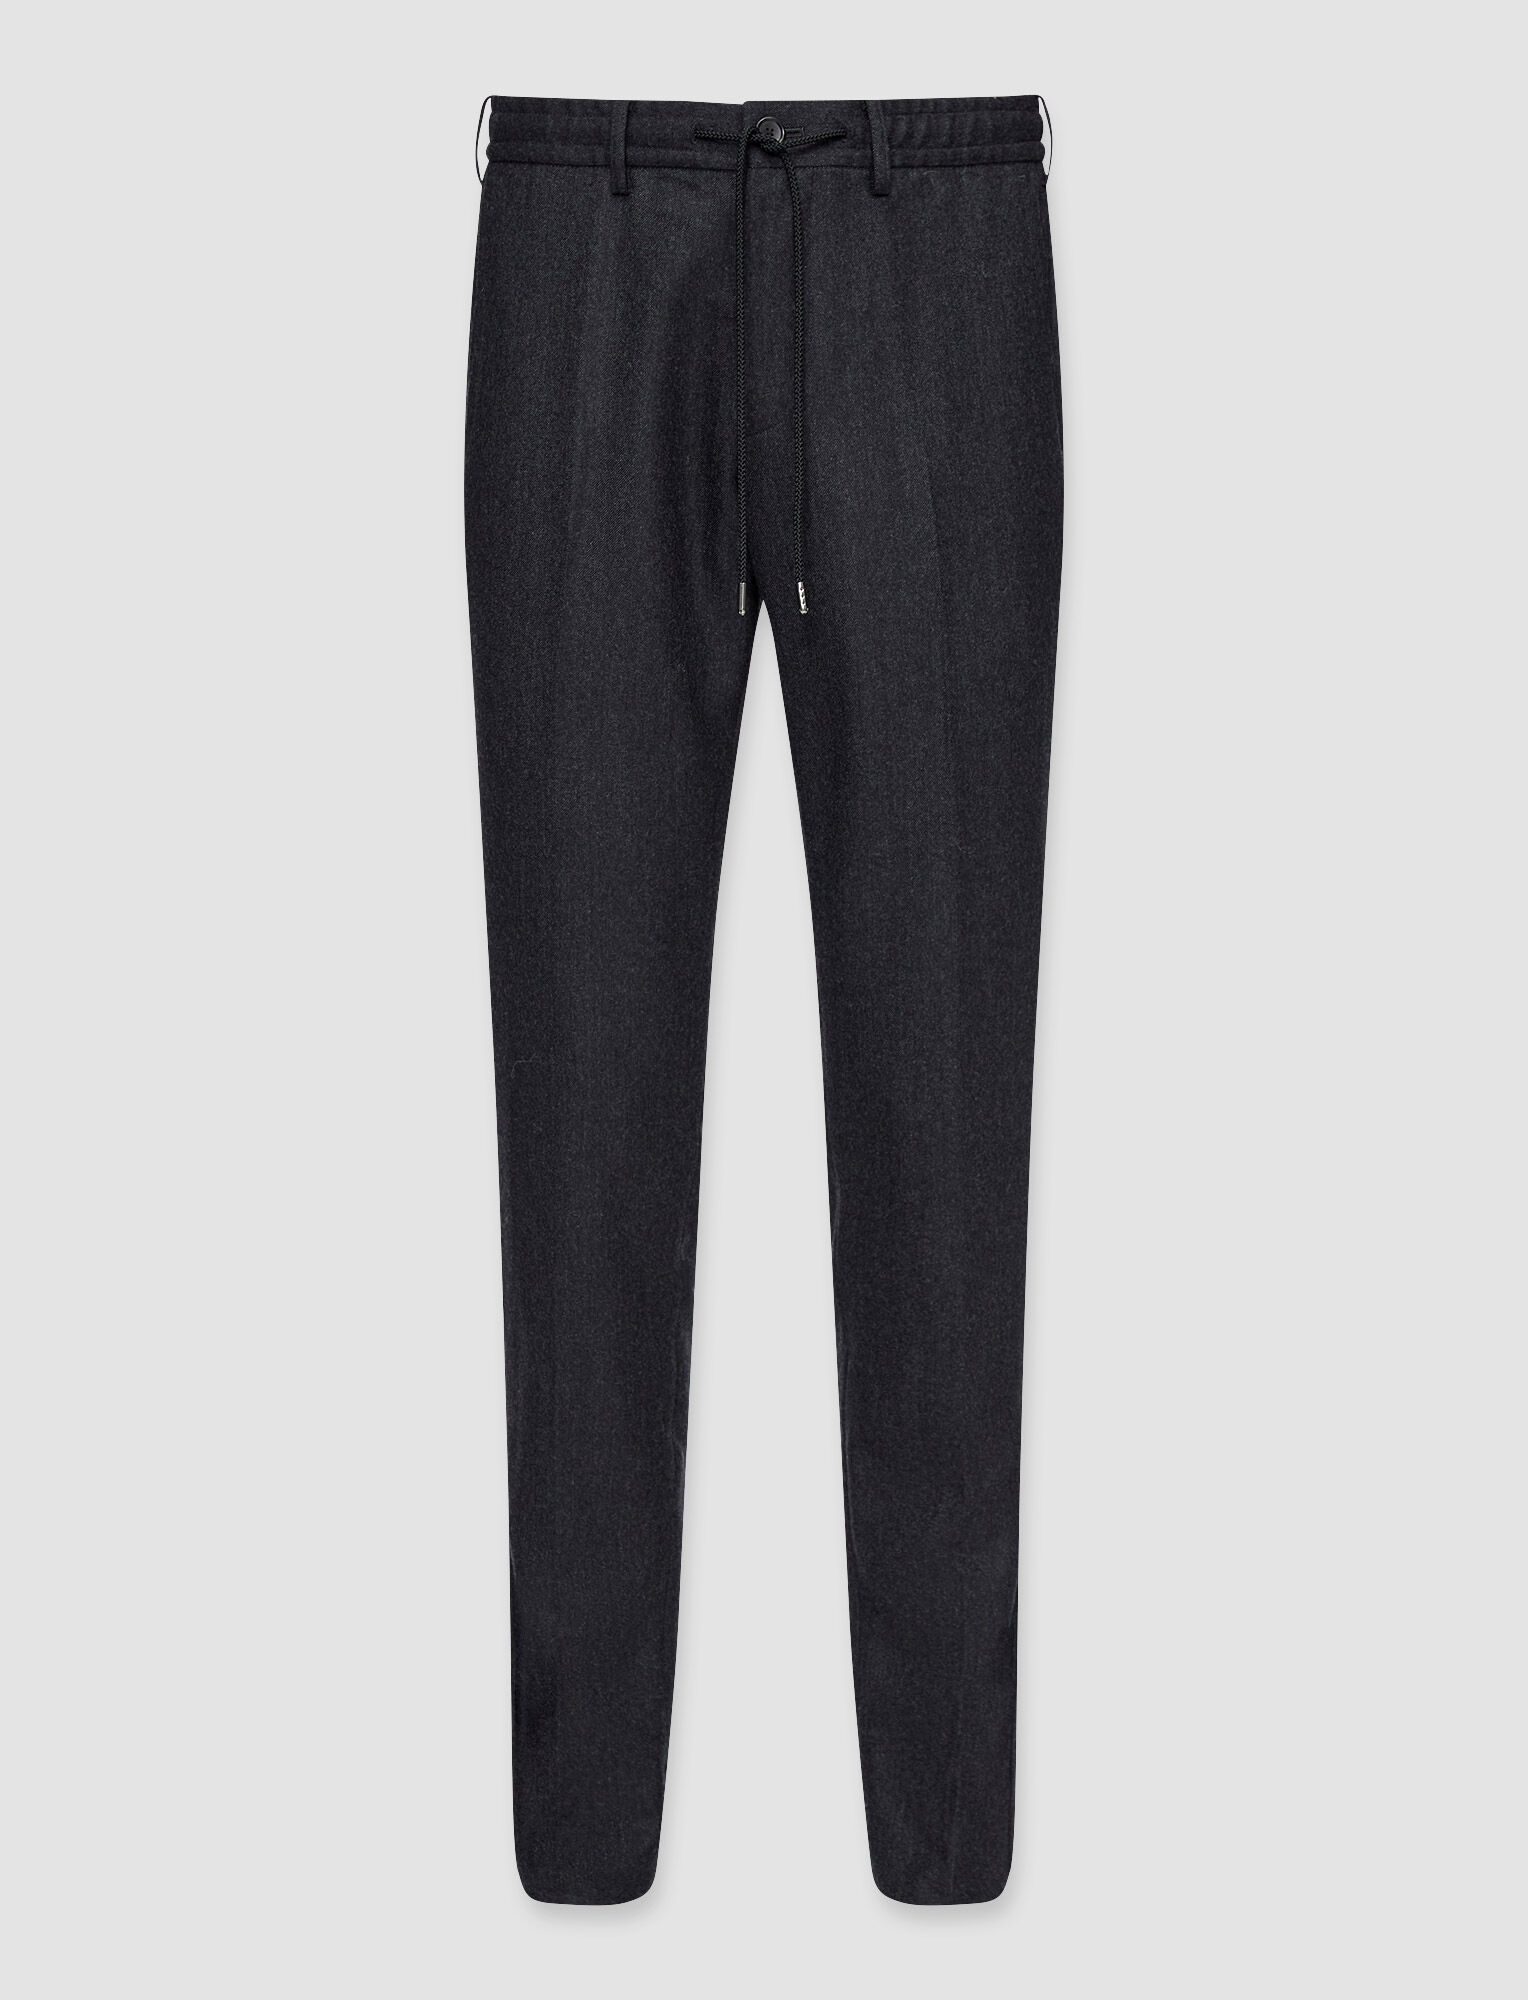 Joseph, Fine Flannel City Trousers, in Dark grey